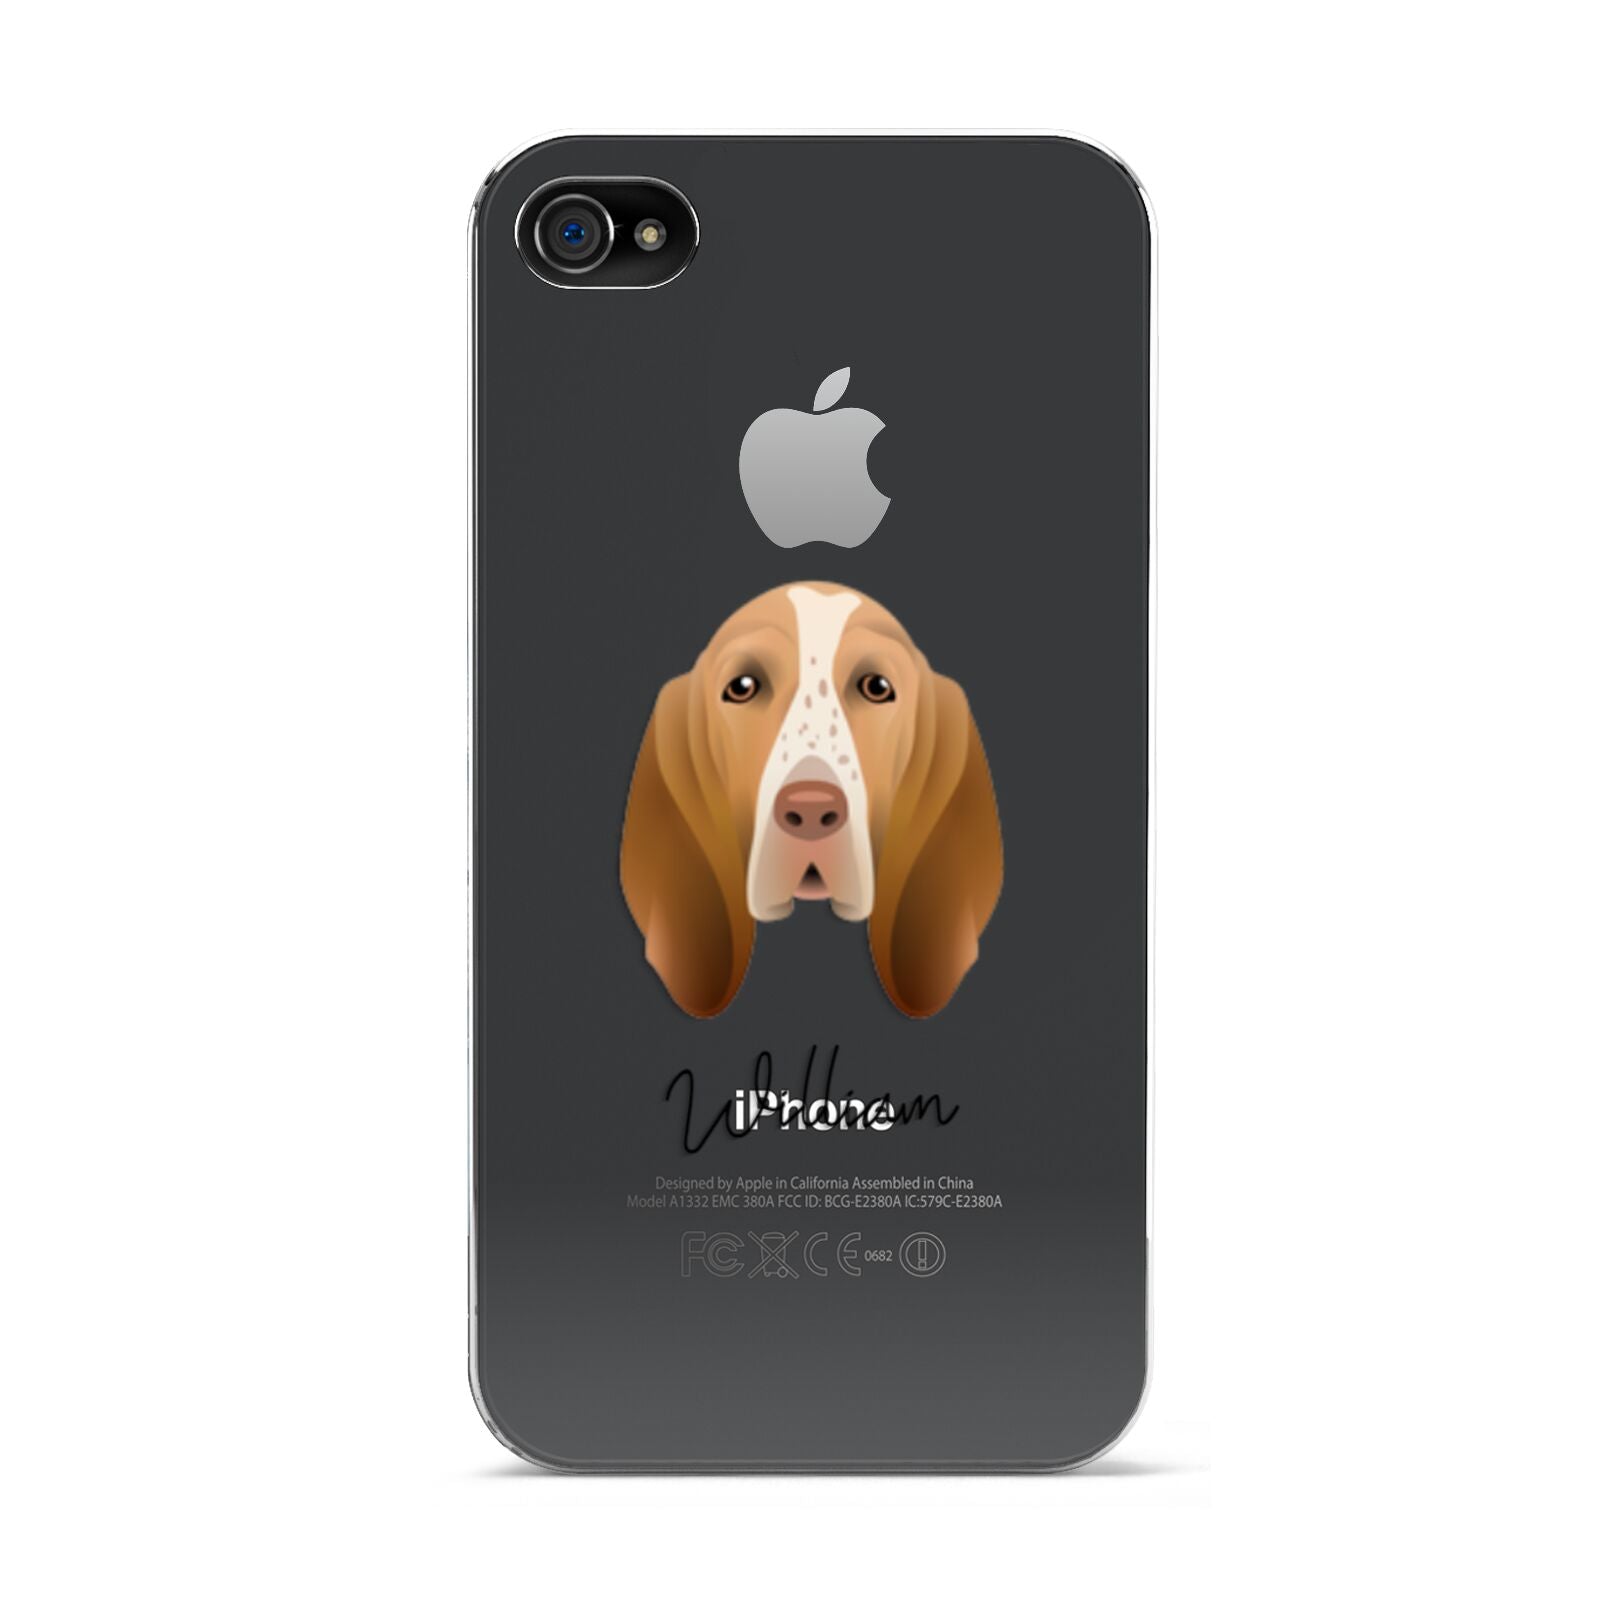 Bracco Italiano Personalised Apple iPhone 4s Case